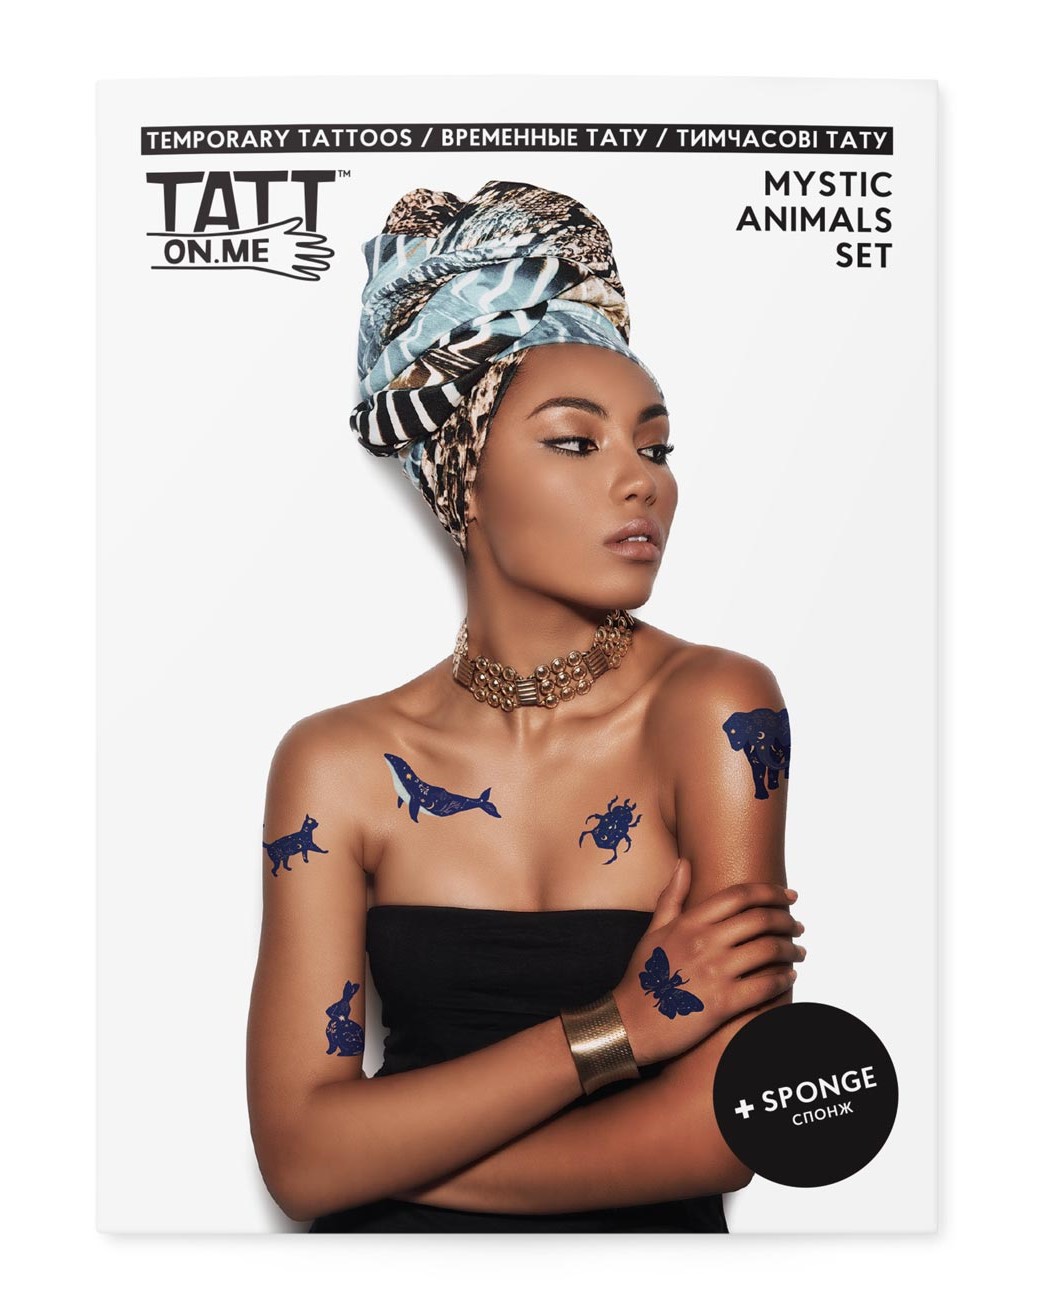 Tatuaje temporare - Mystic Animals | Tatton.me